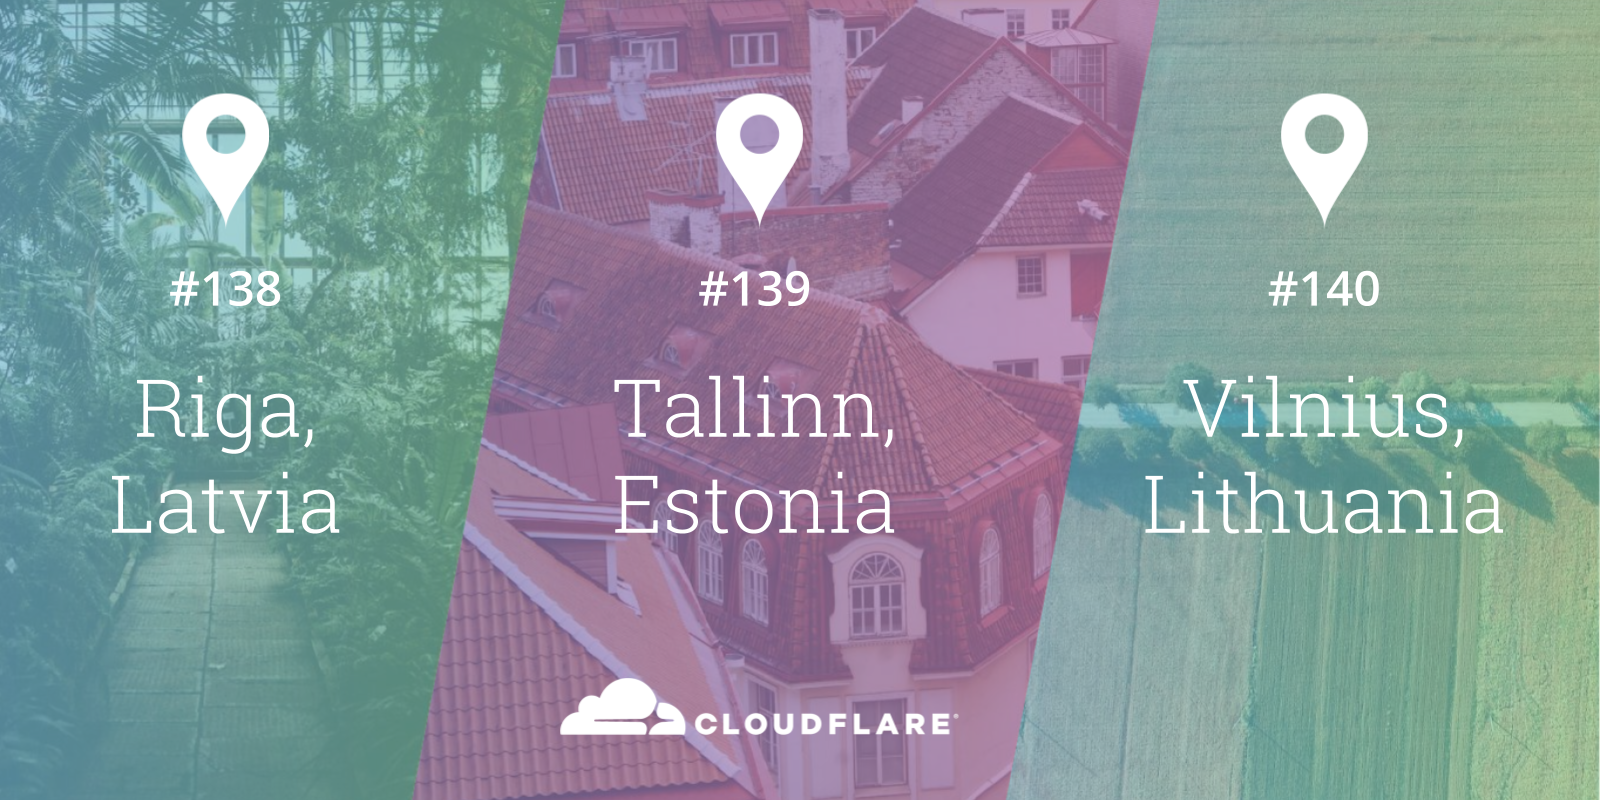 Riga, Tallinn and Vilnius: Launching three new European Cloudflare data centers